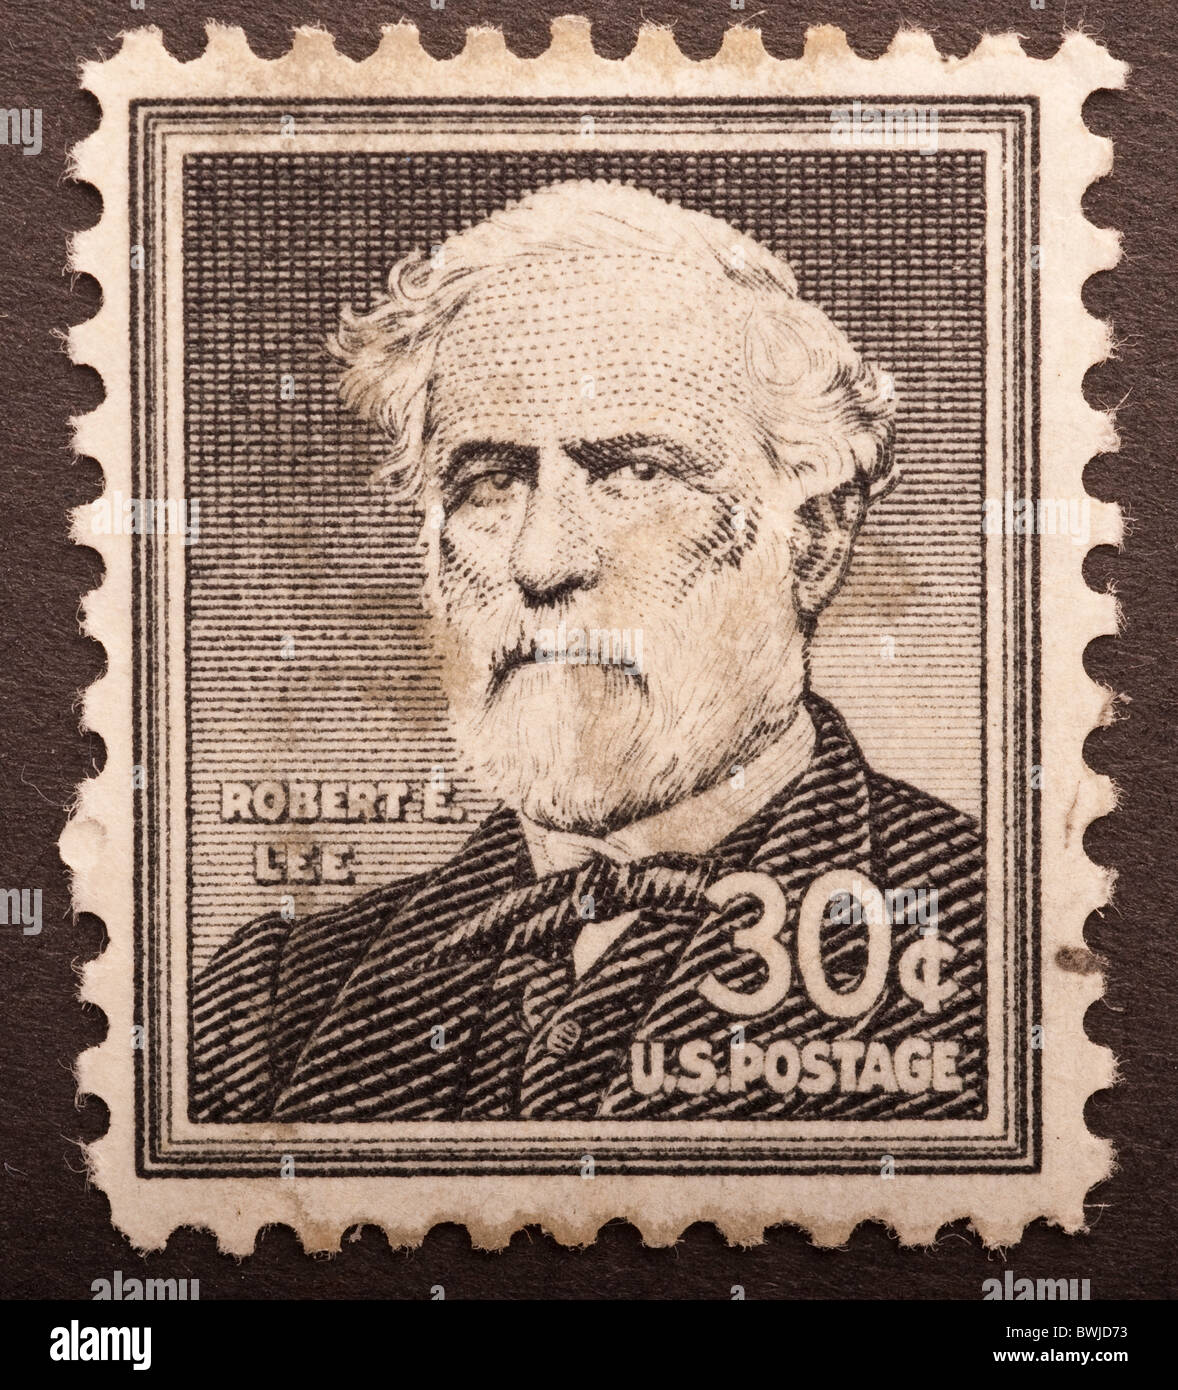 United States Postage 30 cents Stock Photo